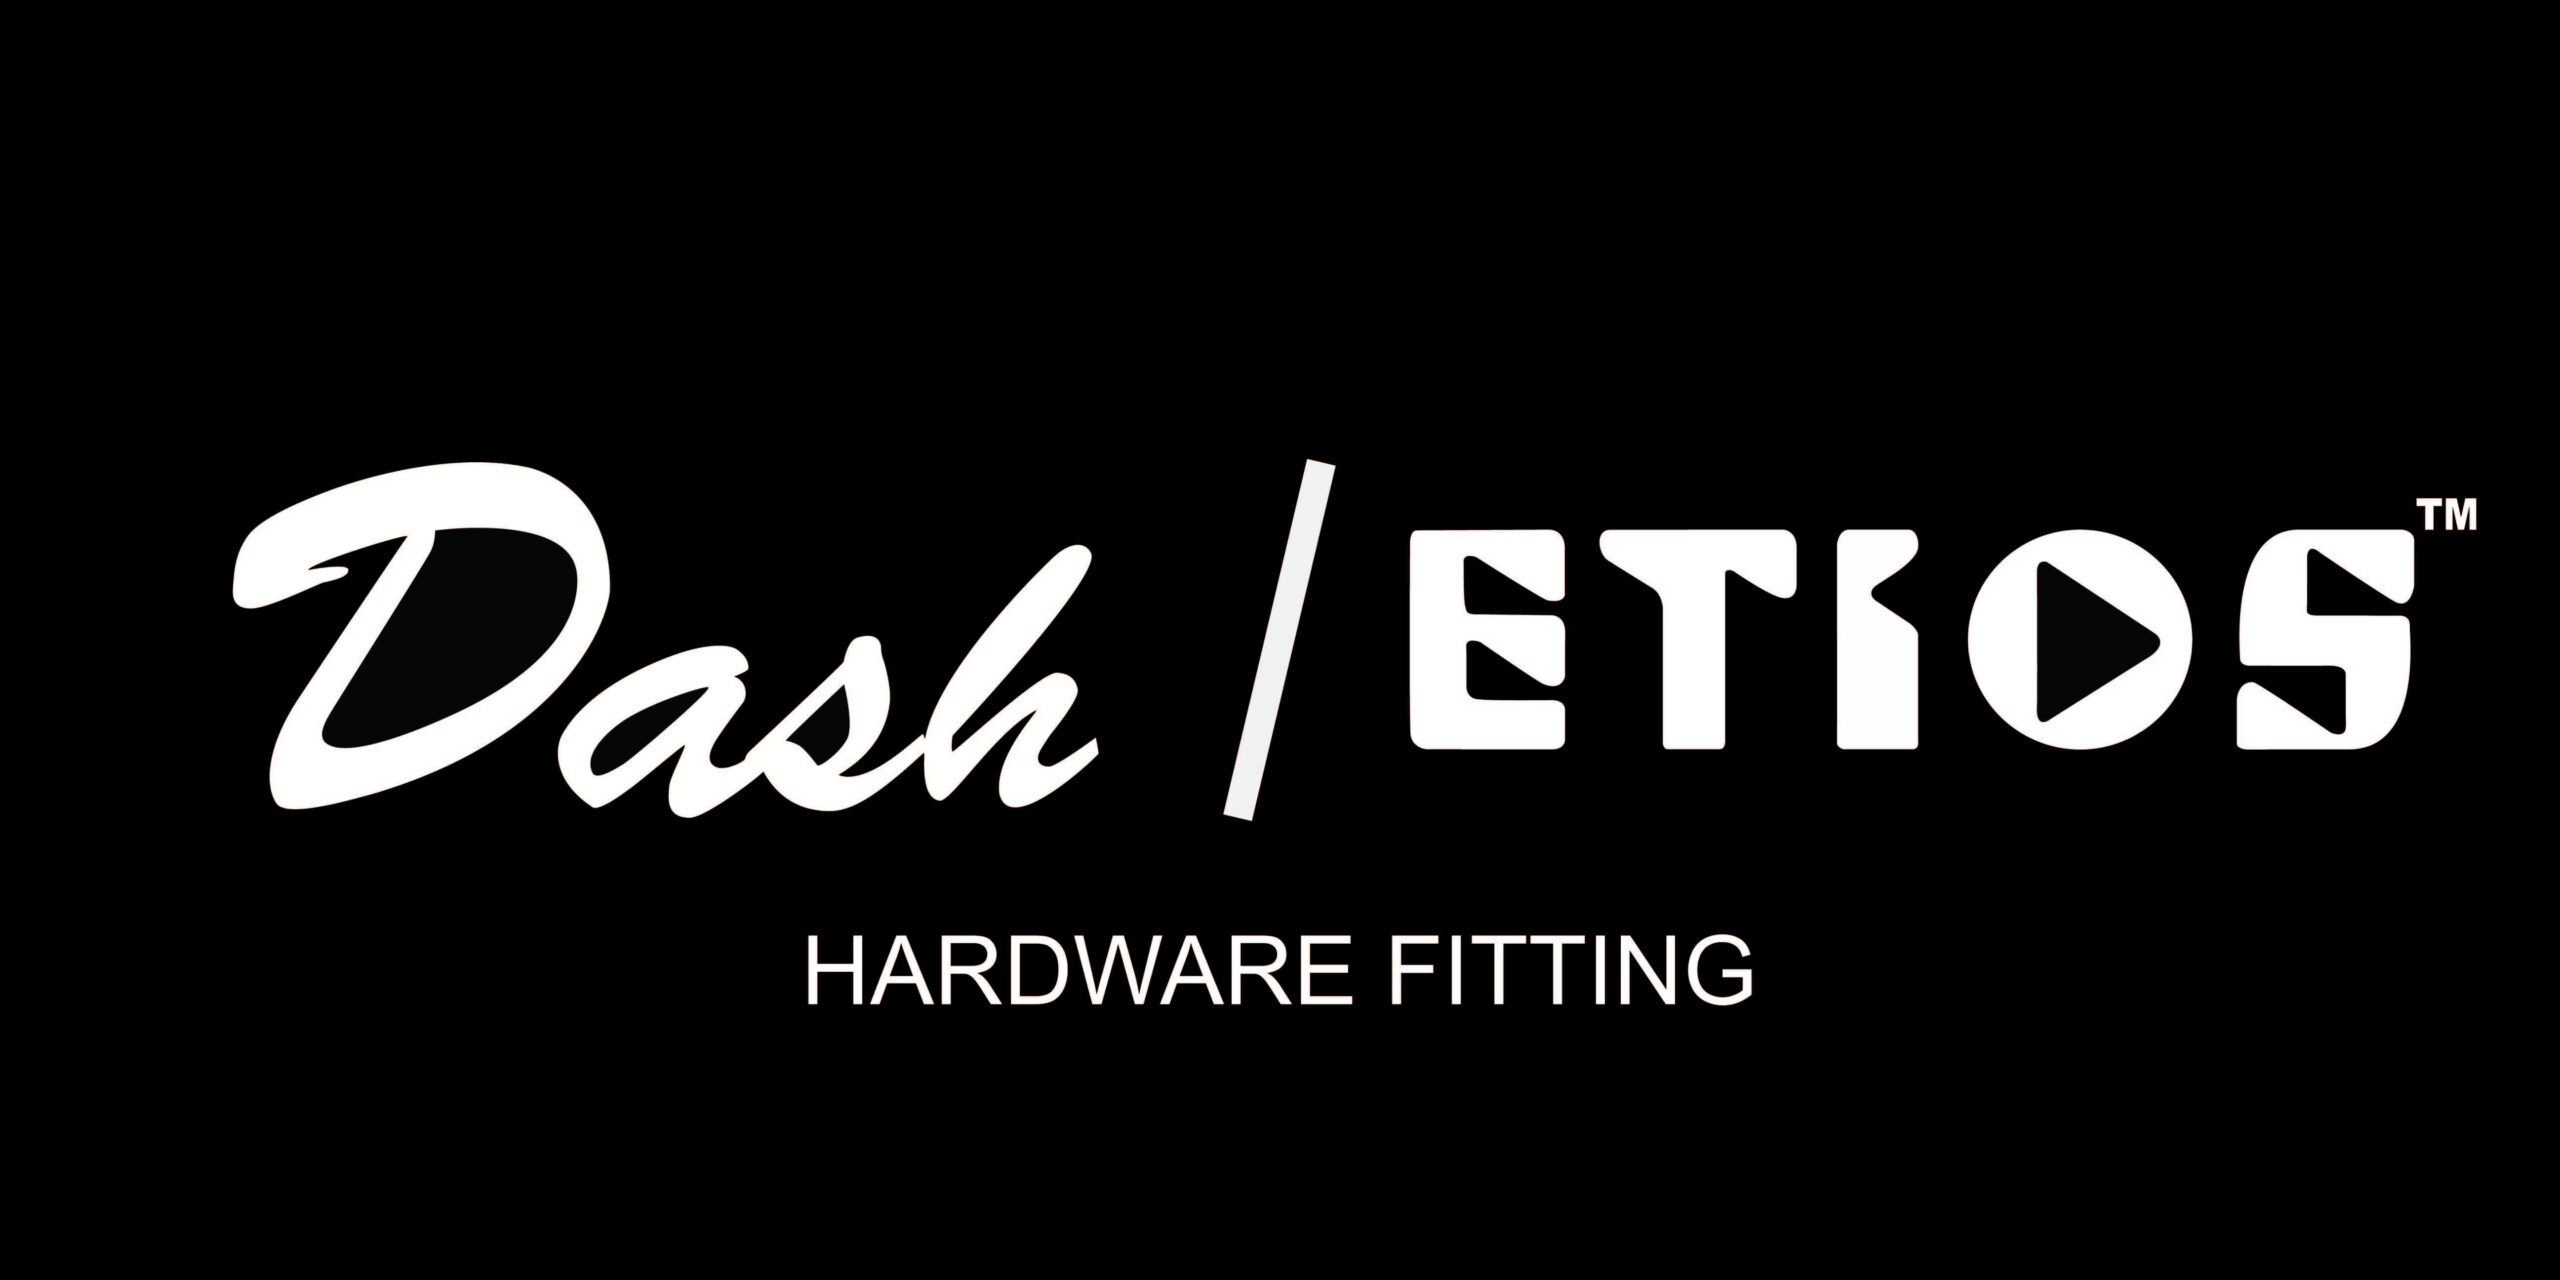 Dash/Etios Hardware Fittings image